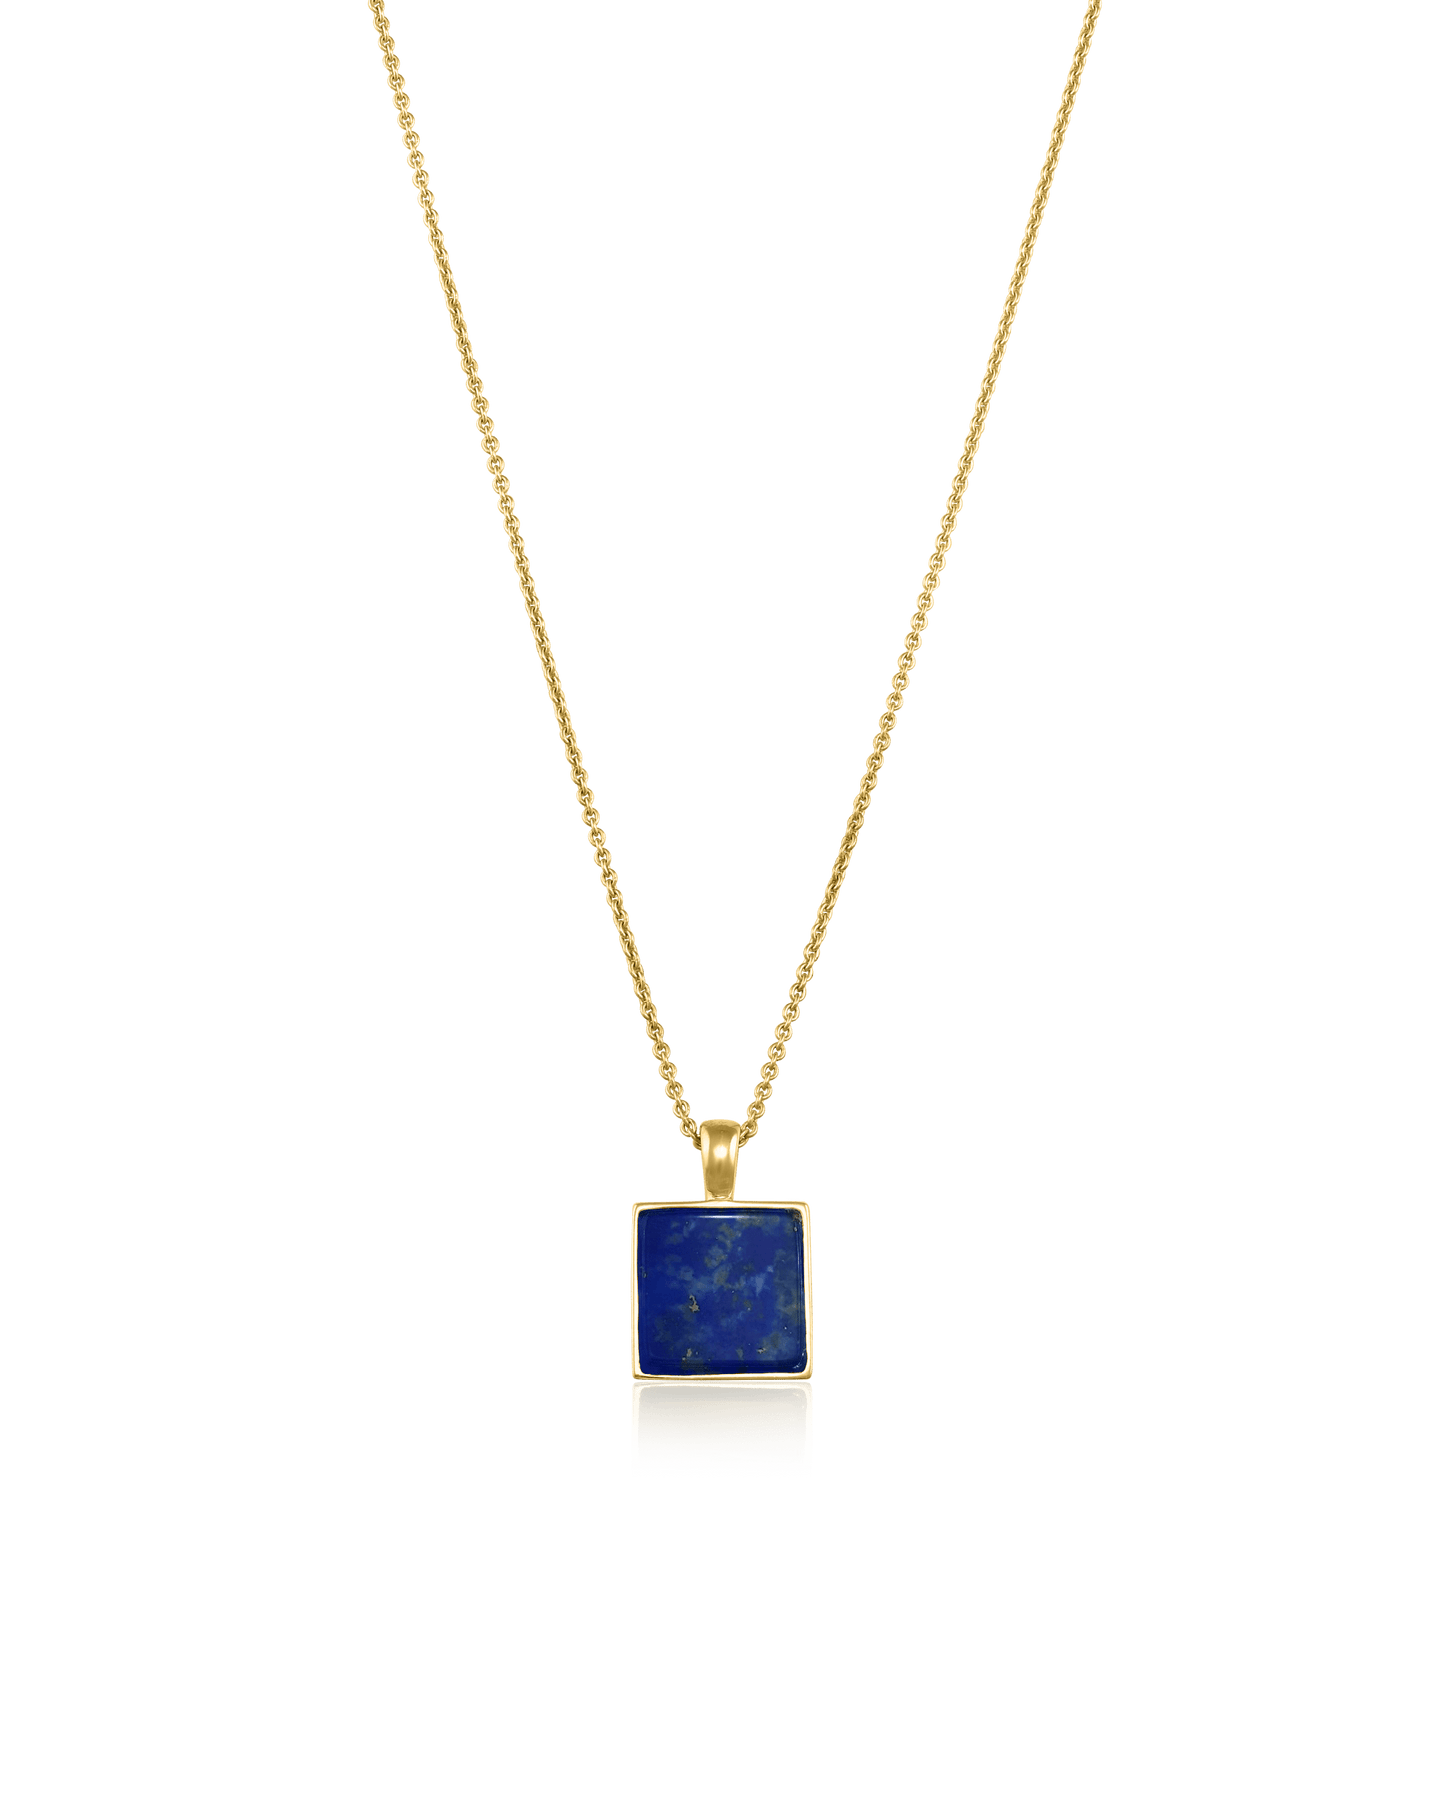 El Dorado Necklace - 18K Gold Vermeil Necklaces magal-dev Blue Lapis 22" 